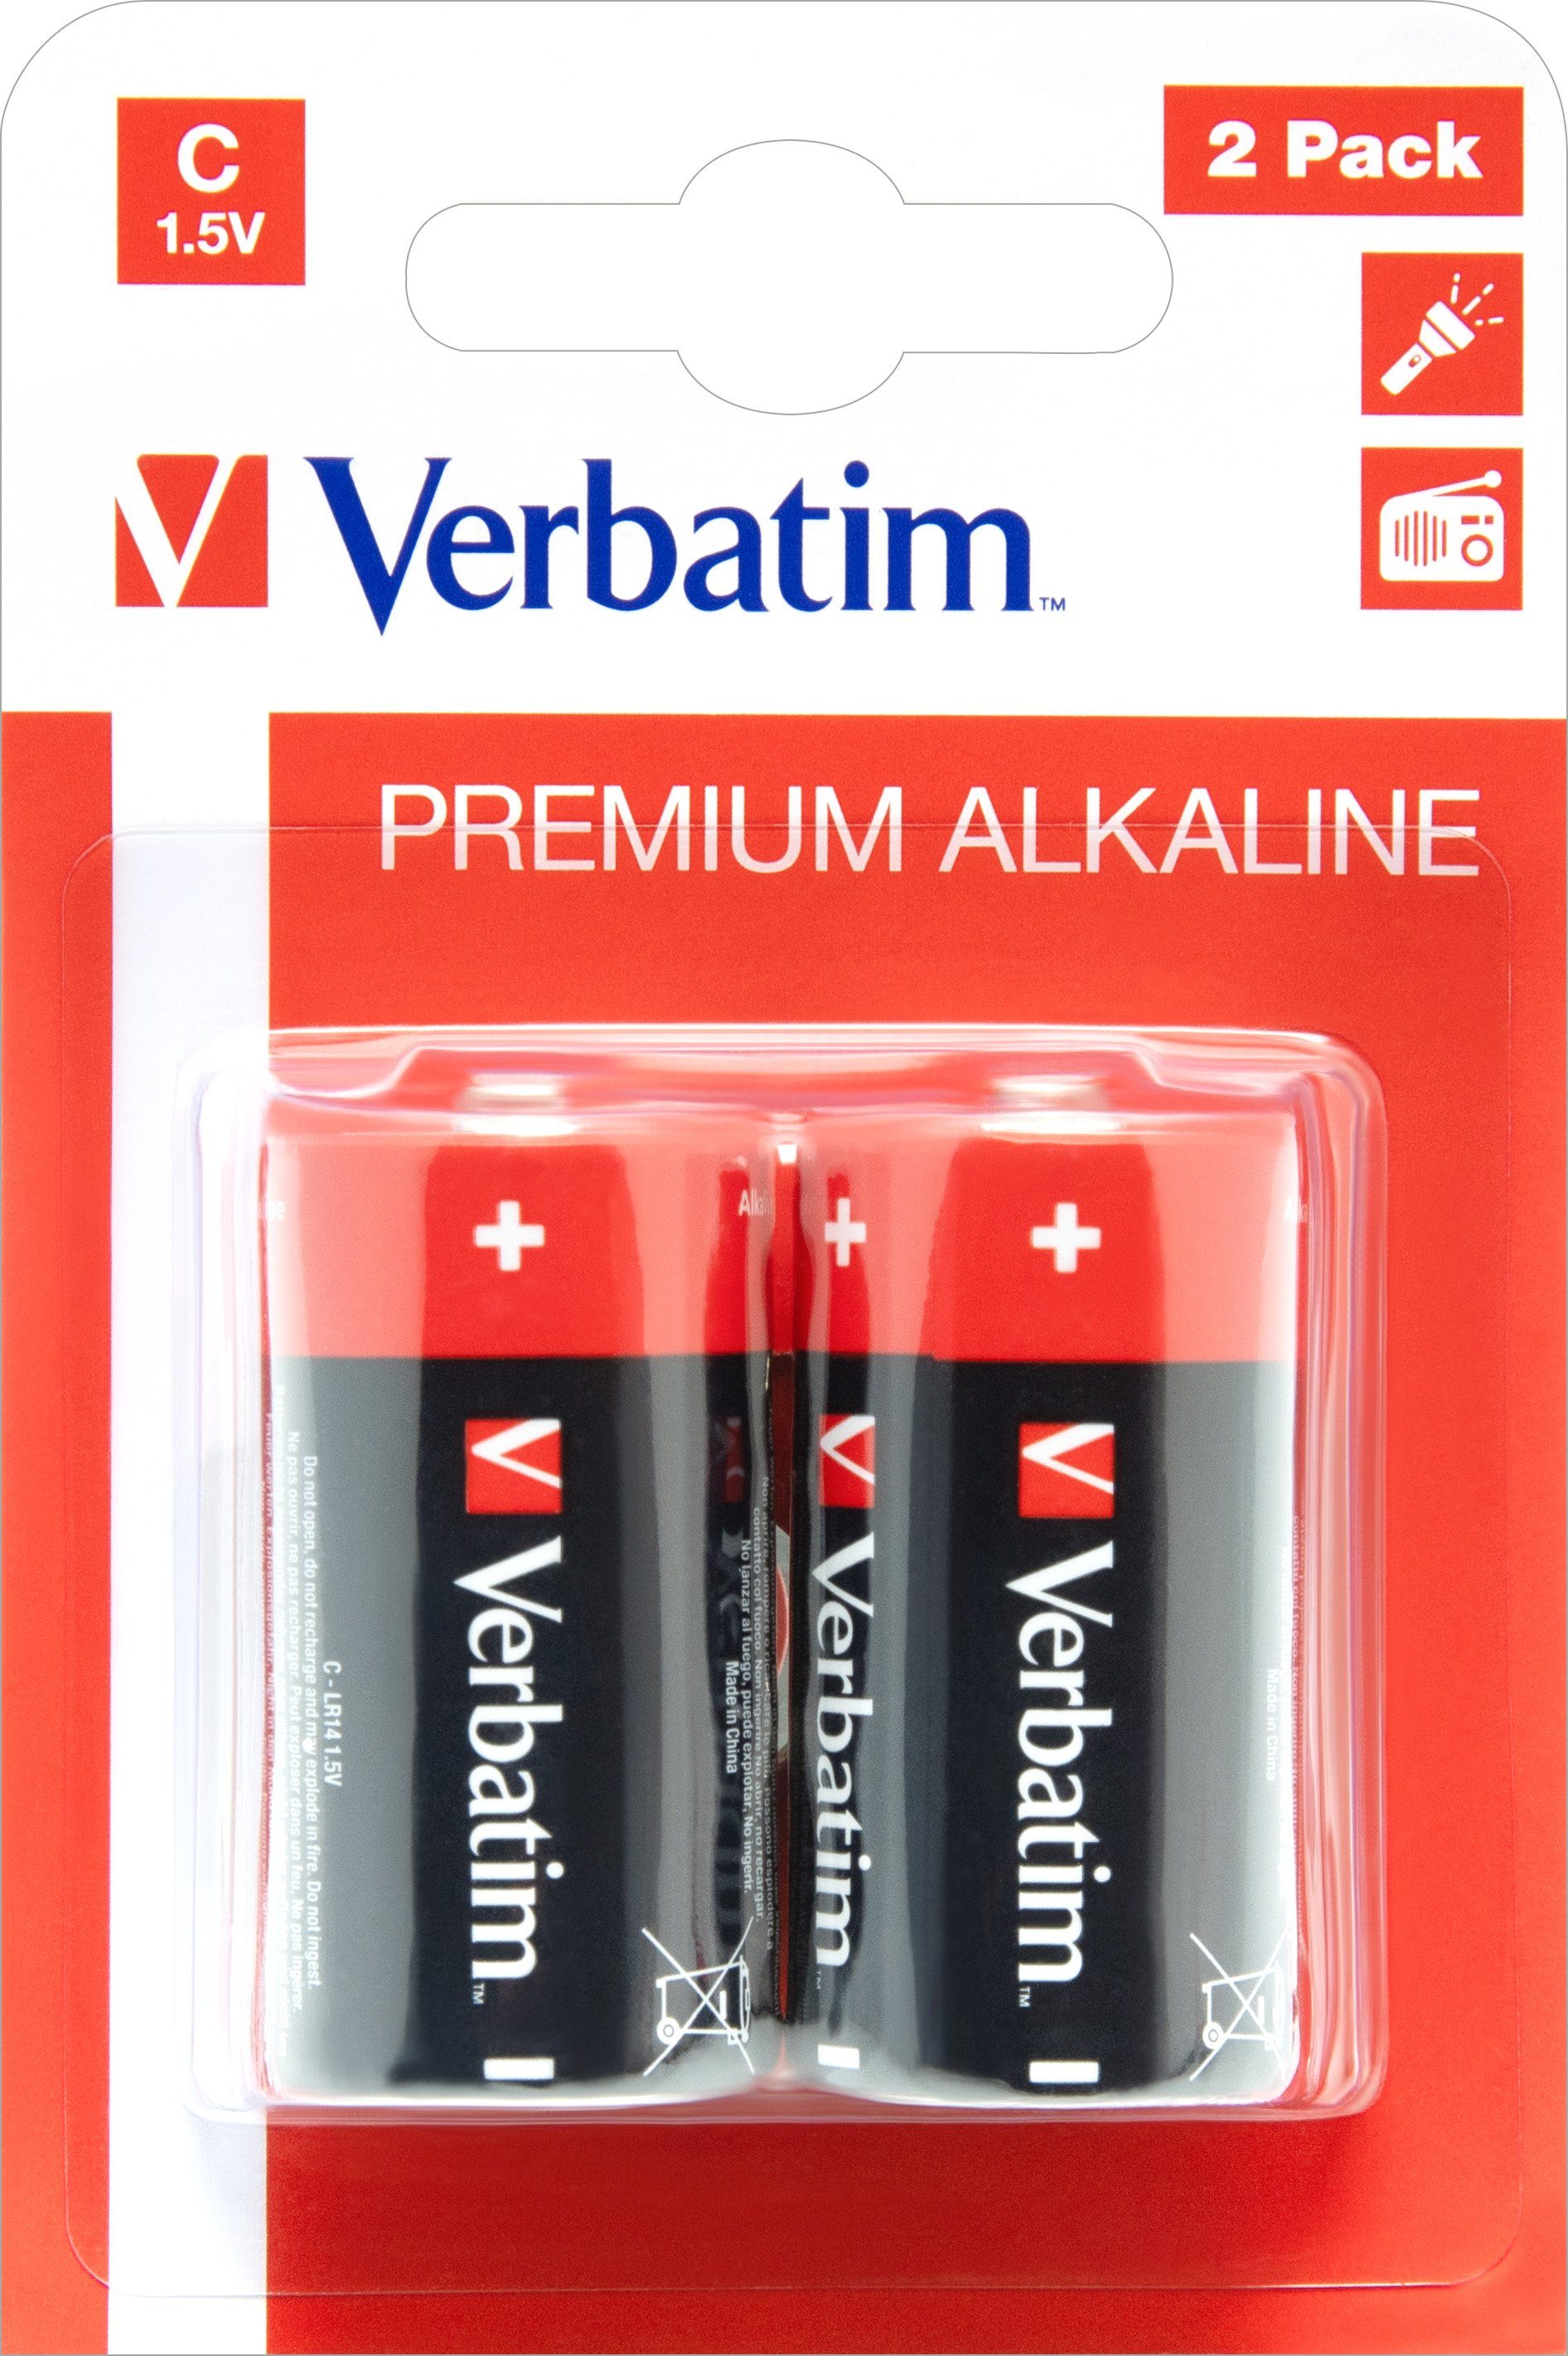 Blist LR14, Batterie Verbatim Batterie 1.5V C, Baby, Alkaline, Verbatim Premium, Retail